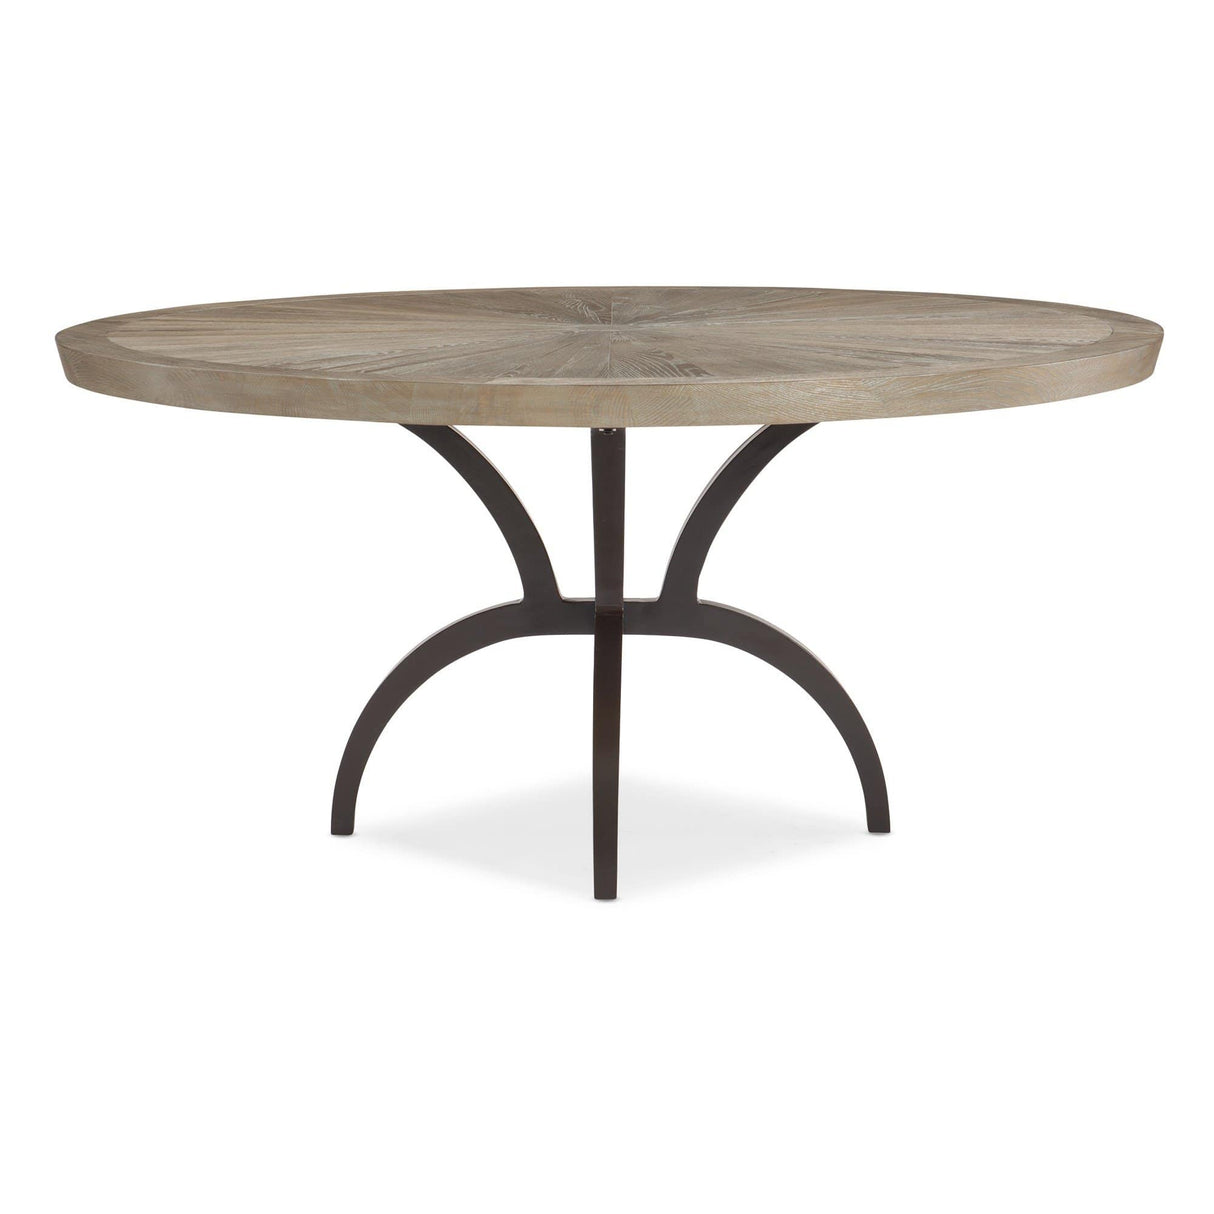 Caracole Rough and Ready 54" Table Furniture caracole-CLA-019-2013